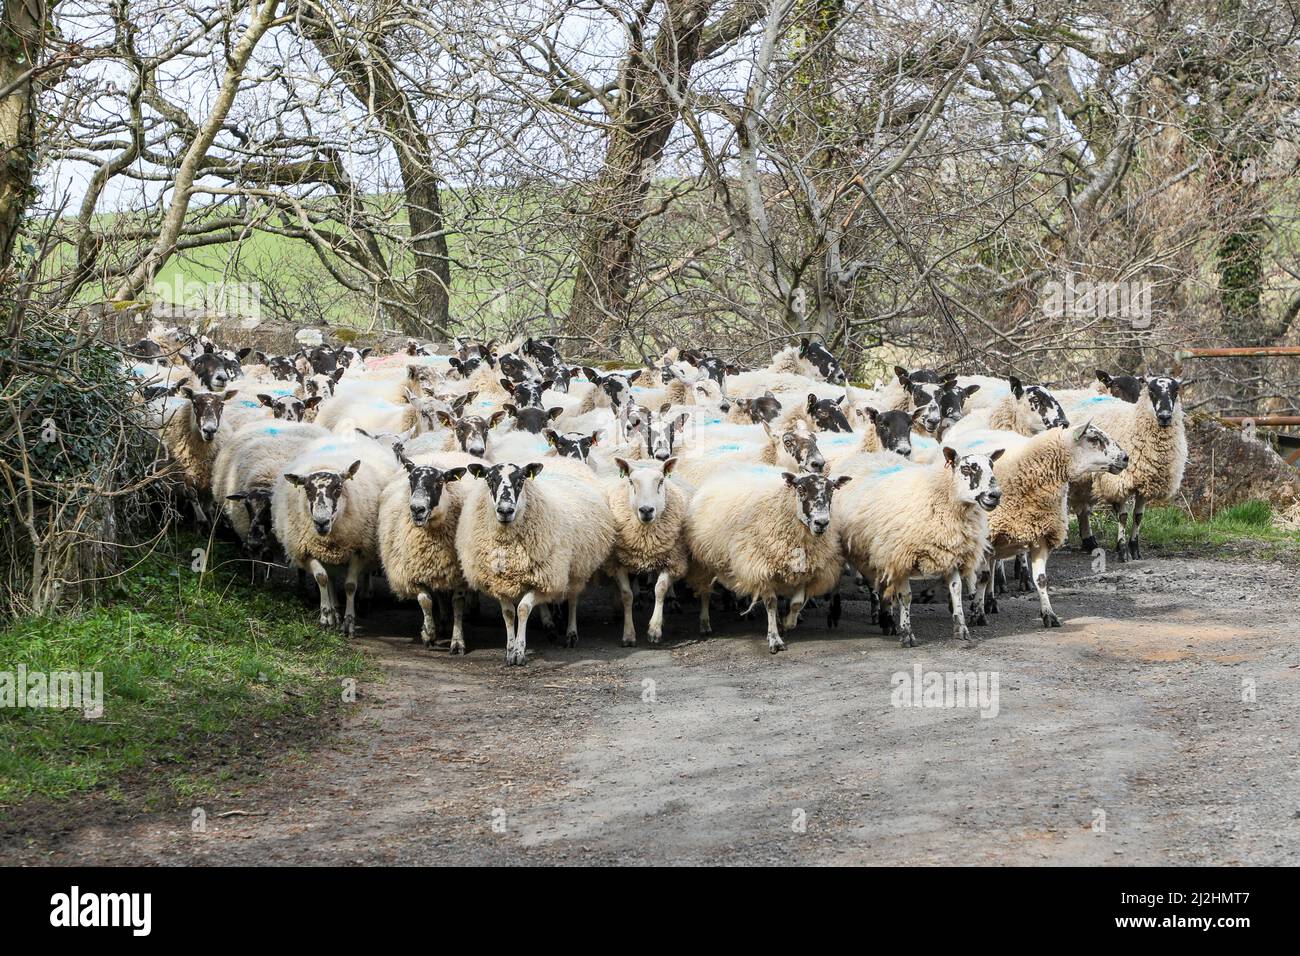 Herd of sheep walking along a country road, Ayrshire, Scotland Stock Photo